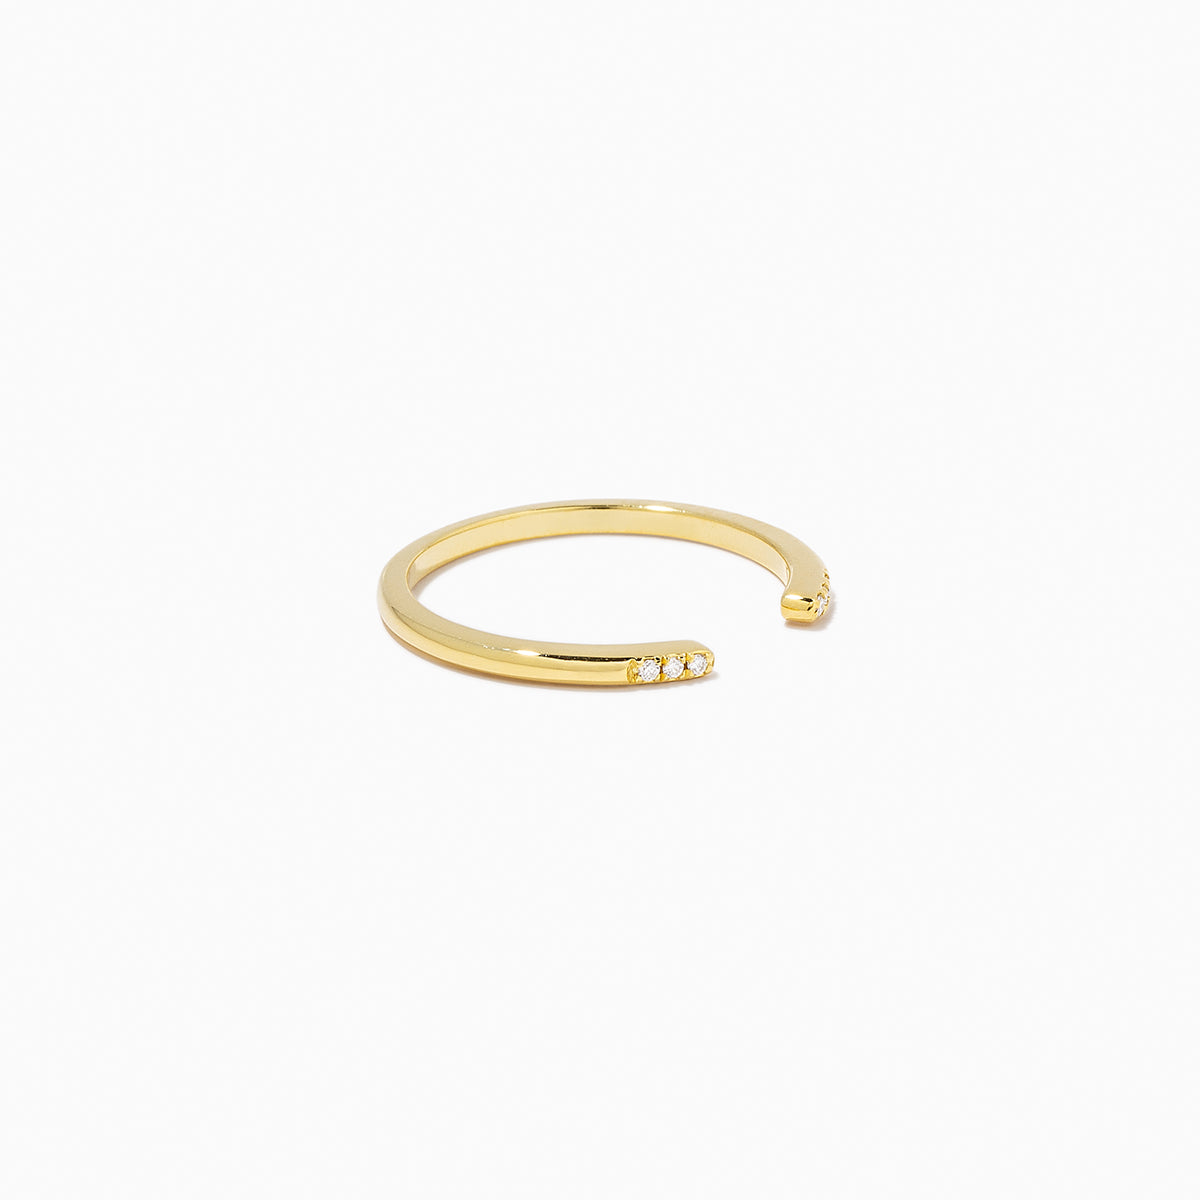 Open Ended Vermeil Ring | Gold Vermeil | Product Detail Image | Uncommon James